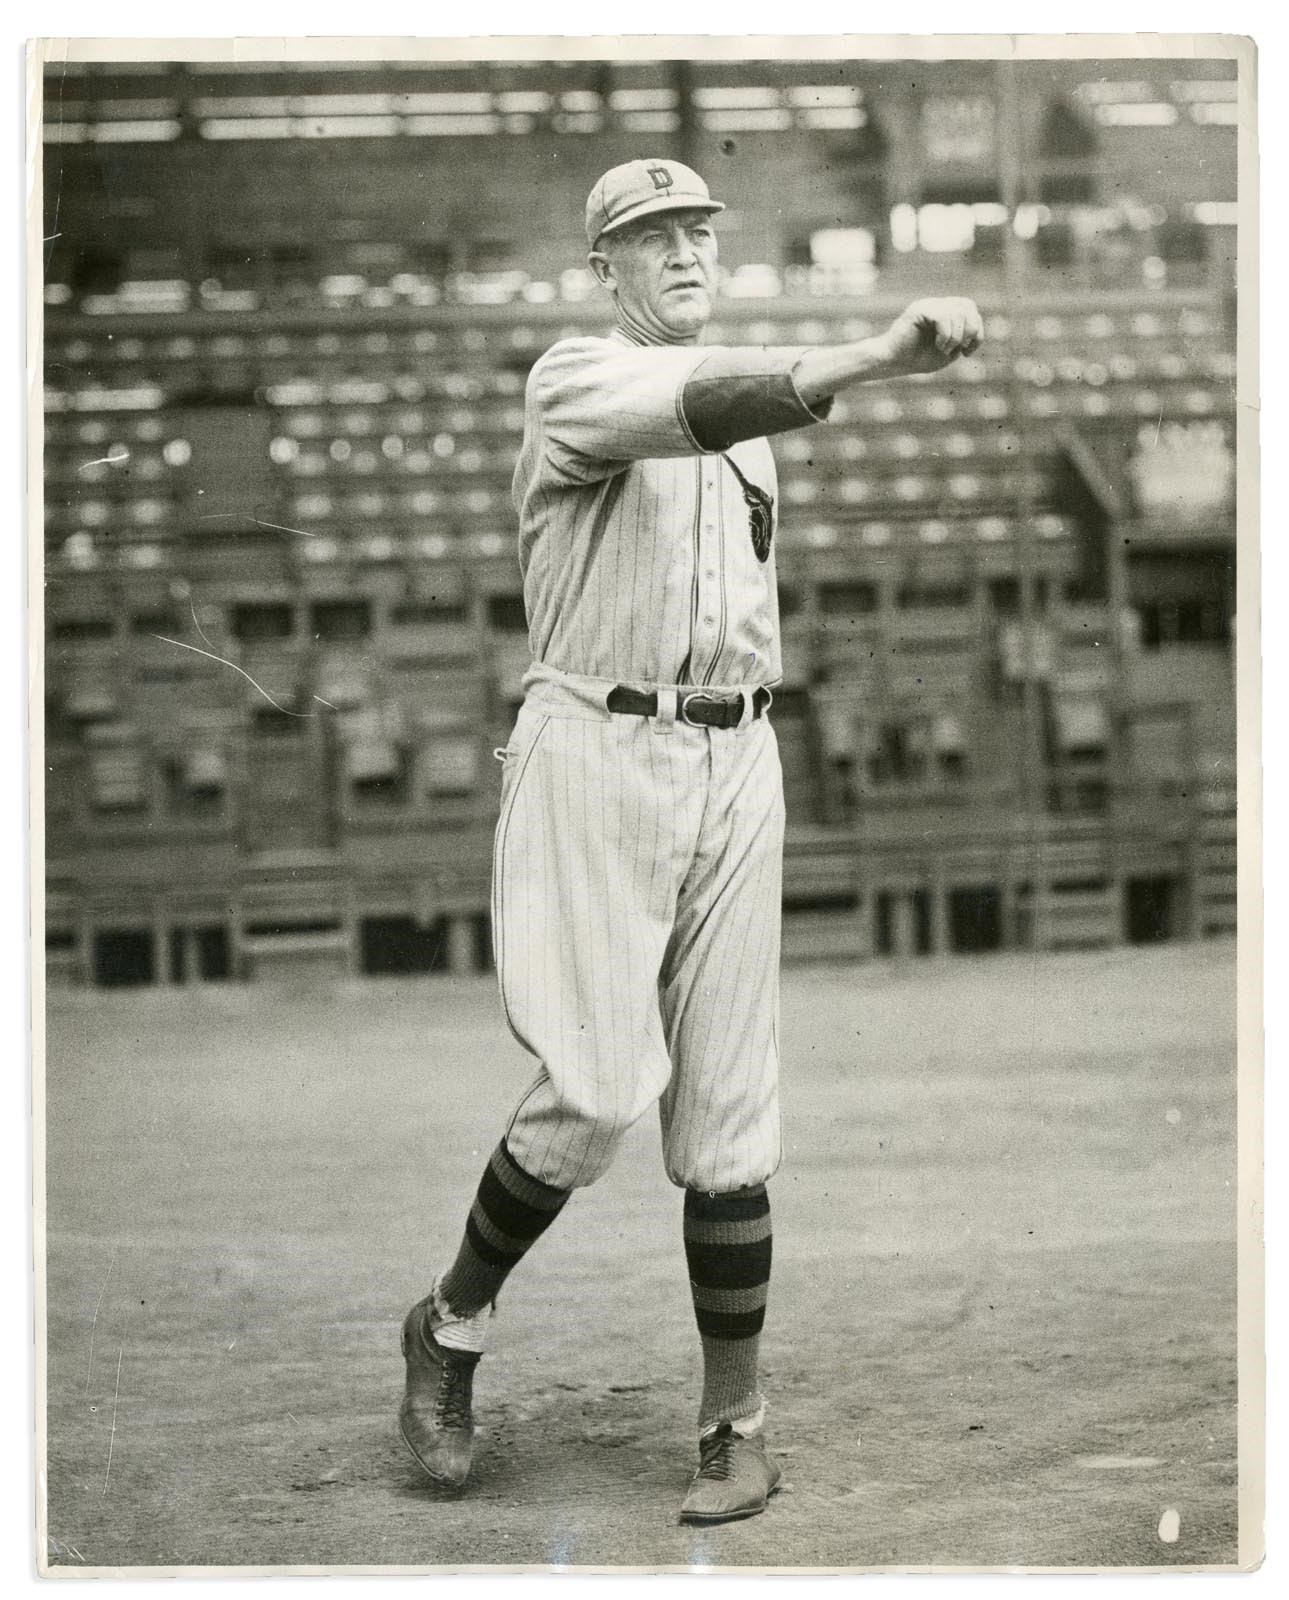 - Last Baseball Photo of Grover Cleveland Alexander